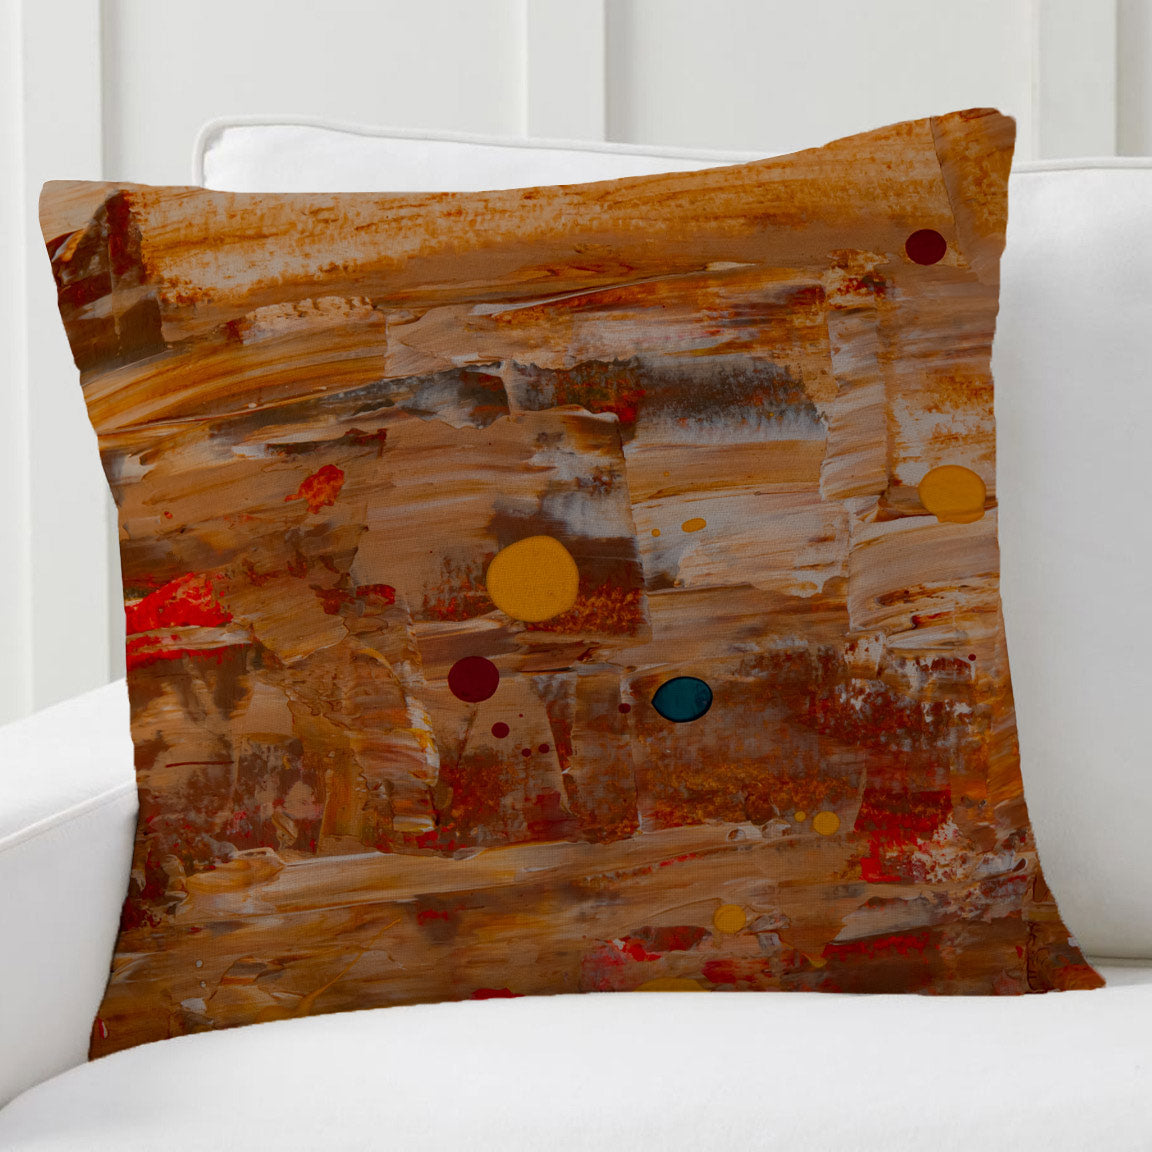 Desert Time-Lapse Cushion Cover Trendy Home